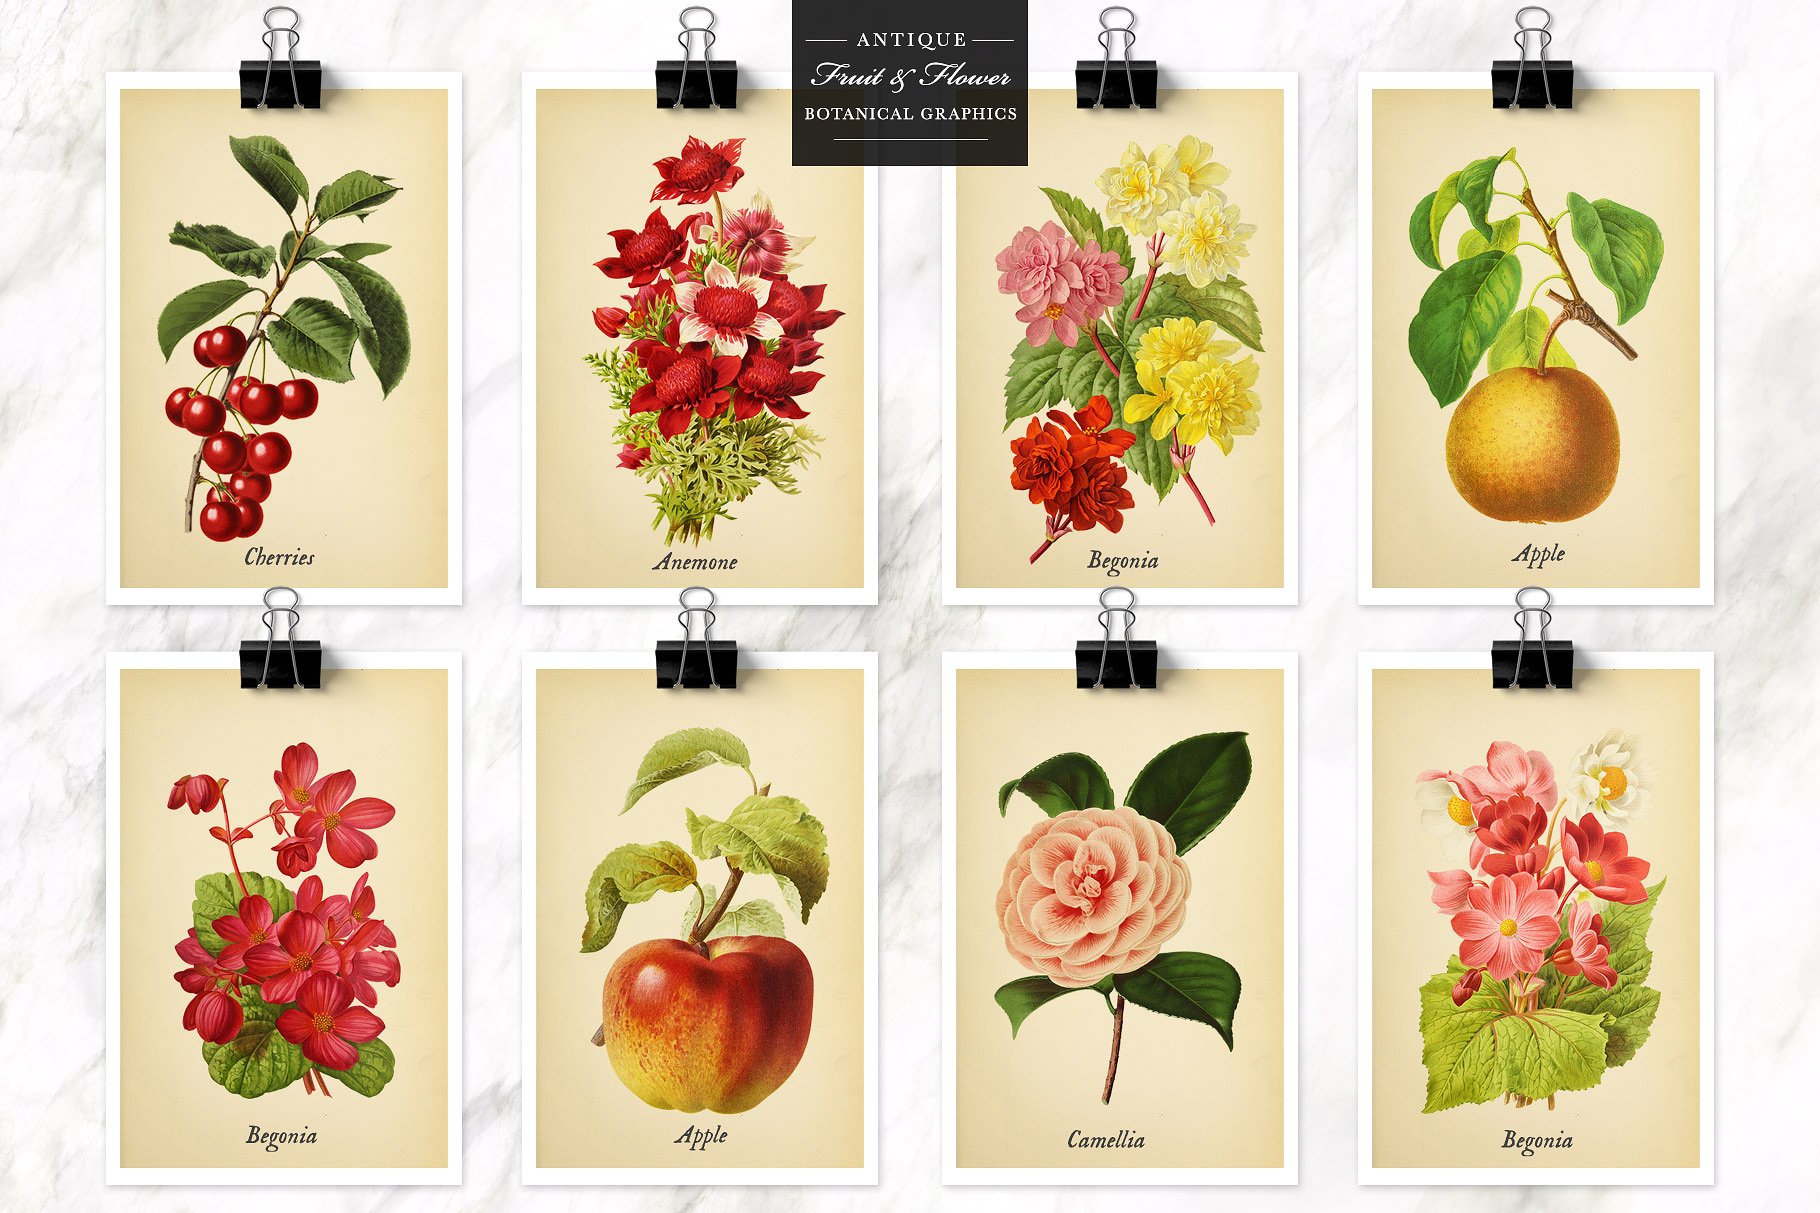 复古风格水果&花卉剪贴画素材 Antique Fruit & Flowers Graphics插图(3)